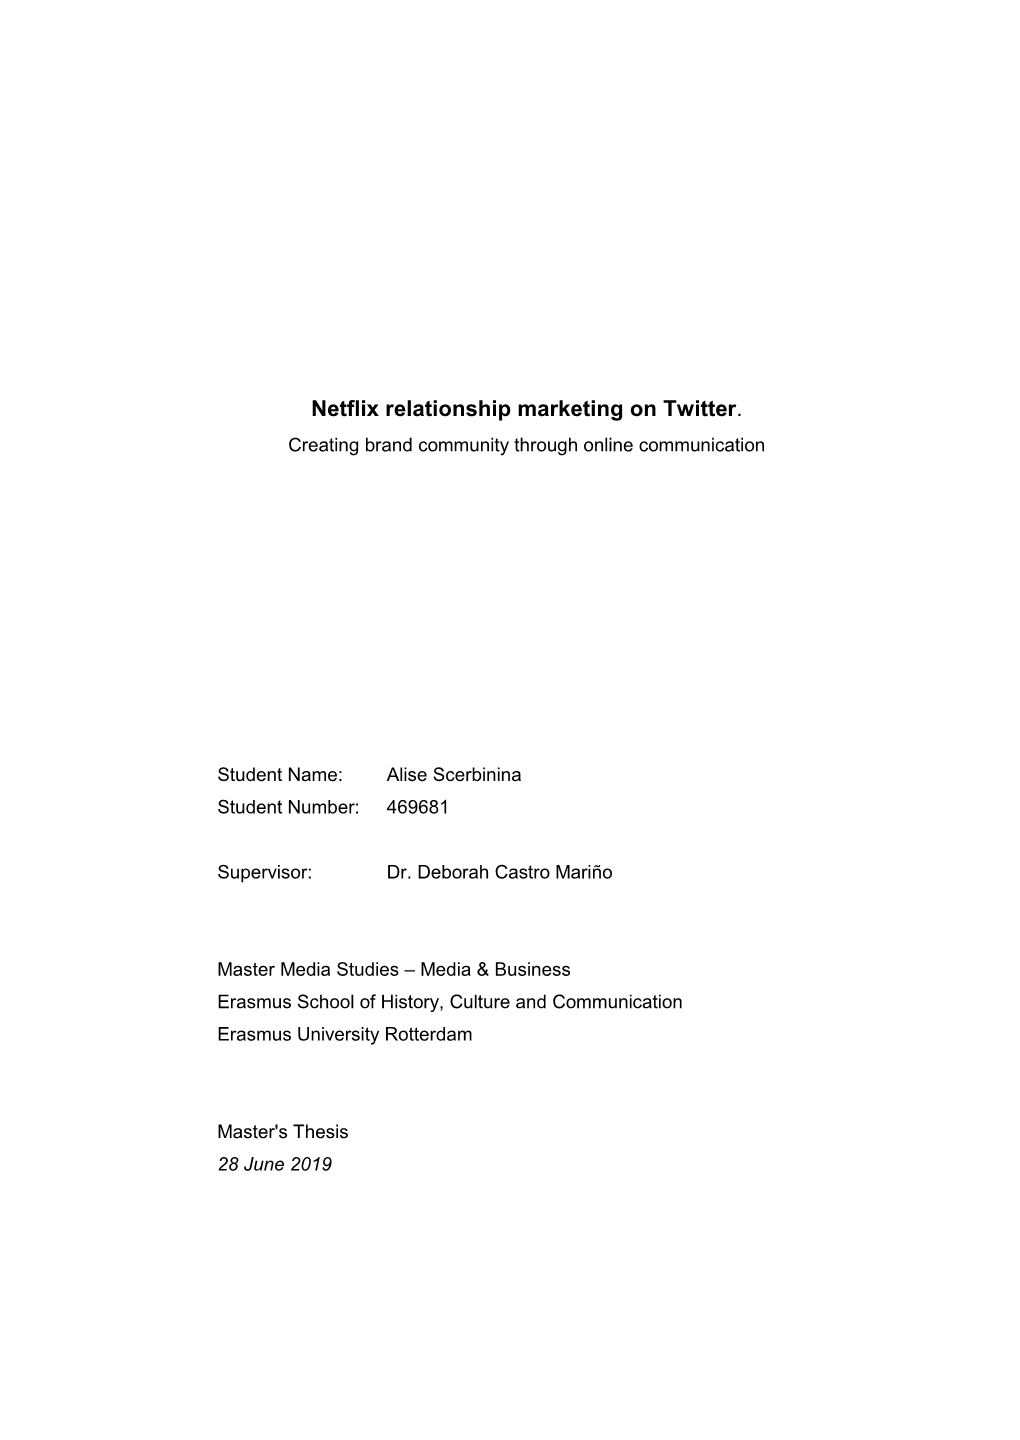 Netflix Relationship Marketing on Twitter. Creating Brand Community Through Online Communication